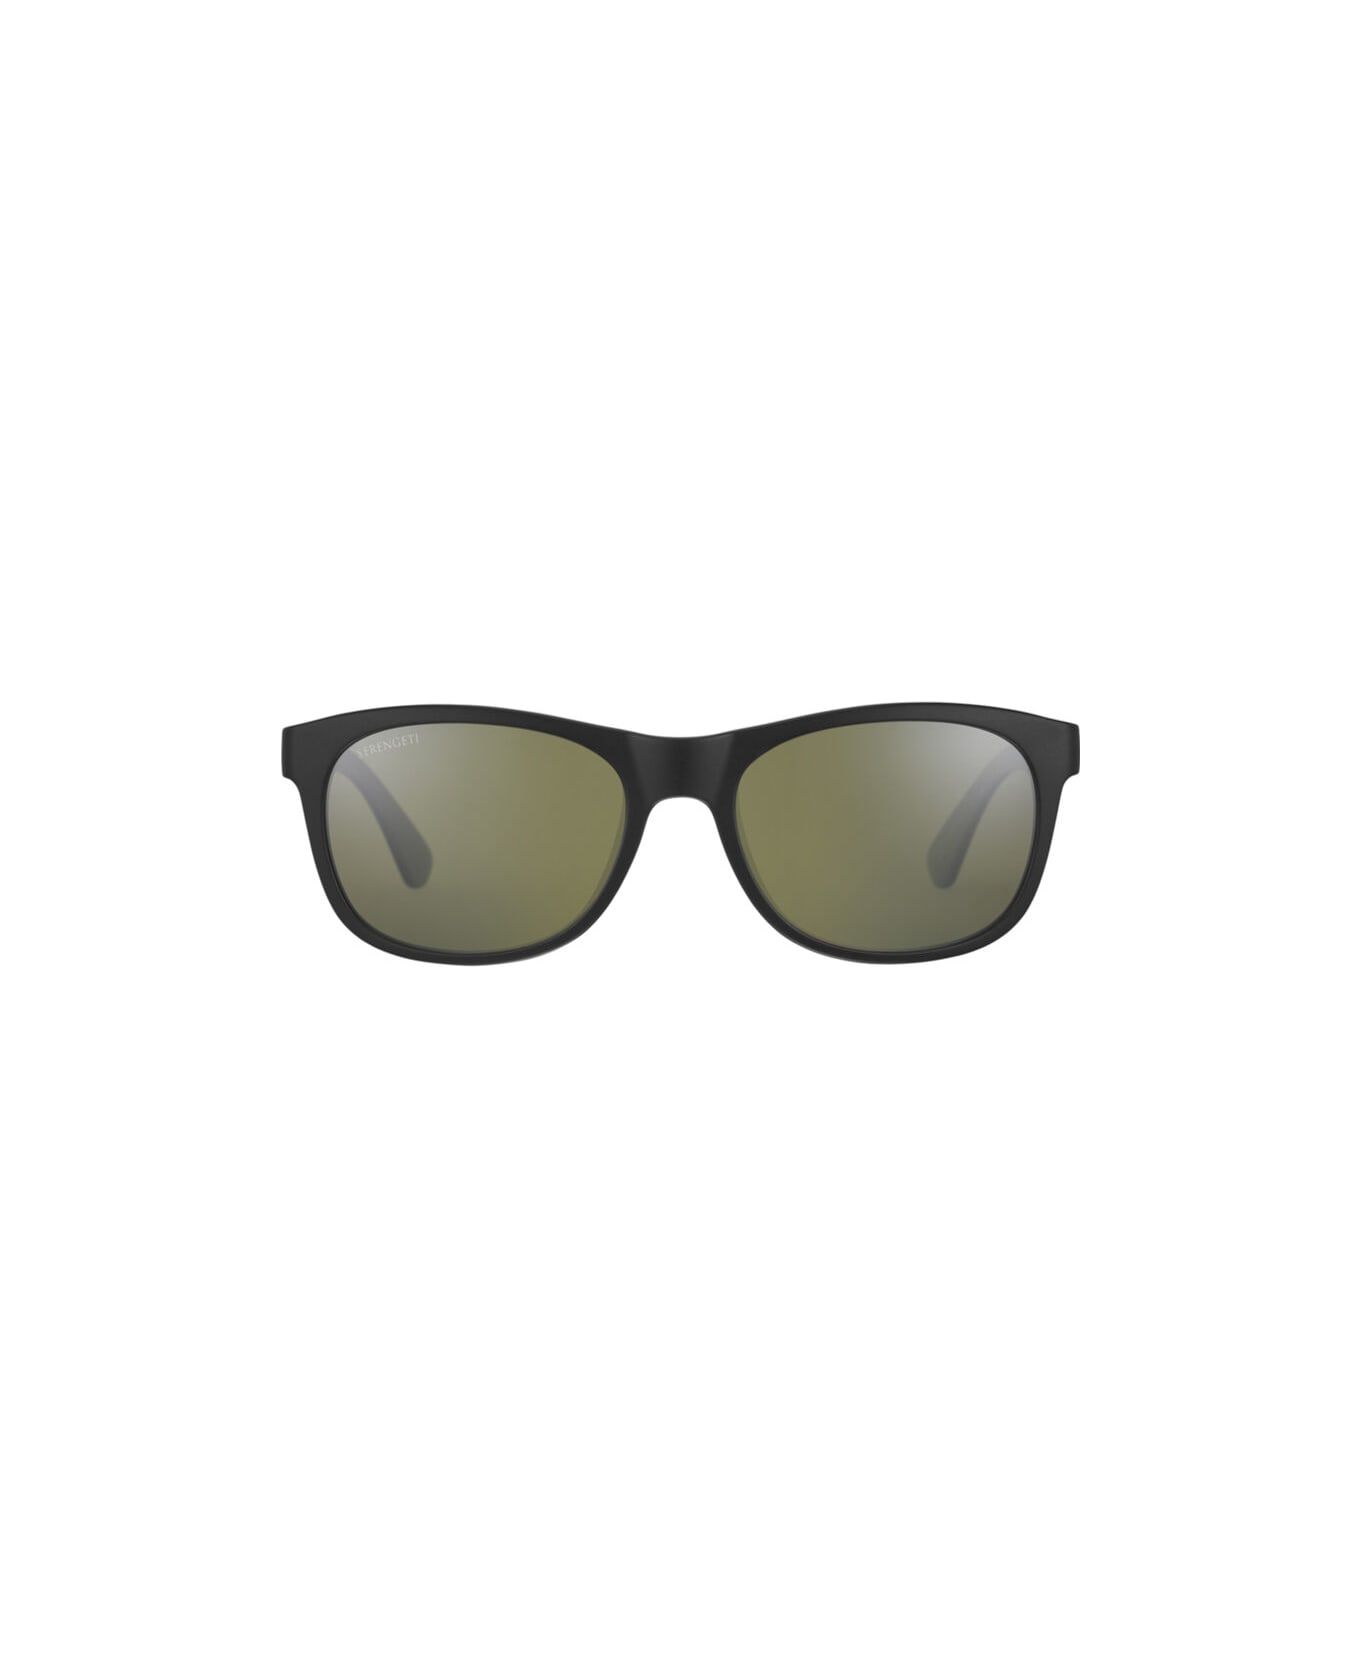 Serengeti Eyewear Anteo 8667 Sunglasses - Matte black